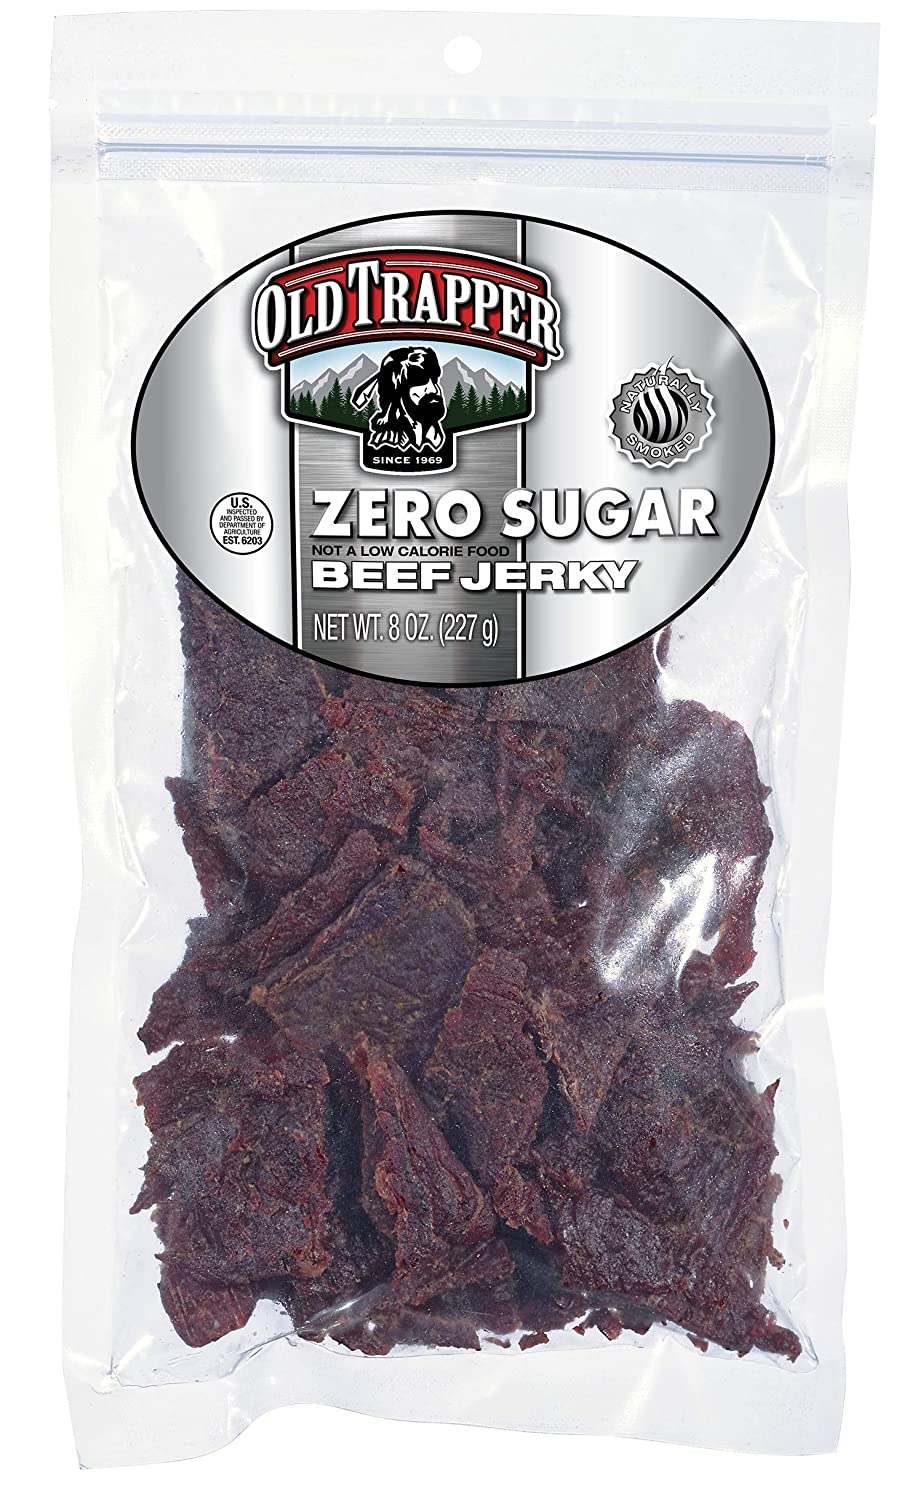 ~Old Trapper – ZERO SUGAR Beef Jerky!